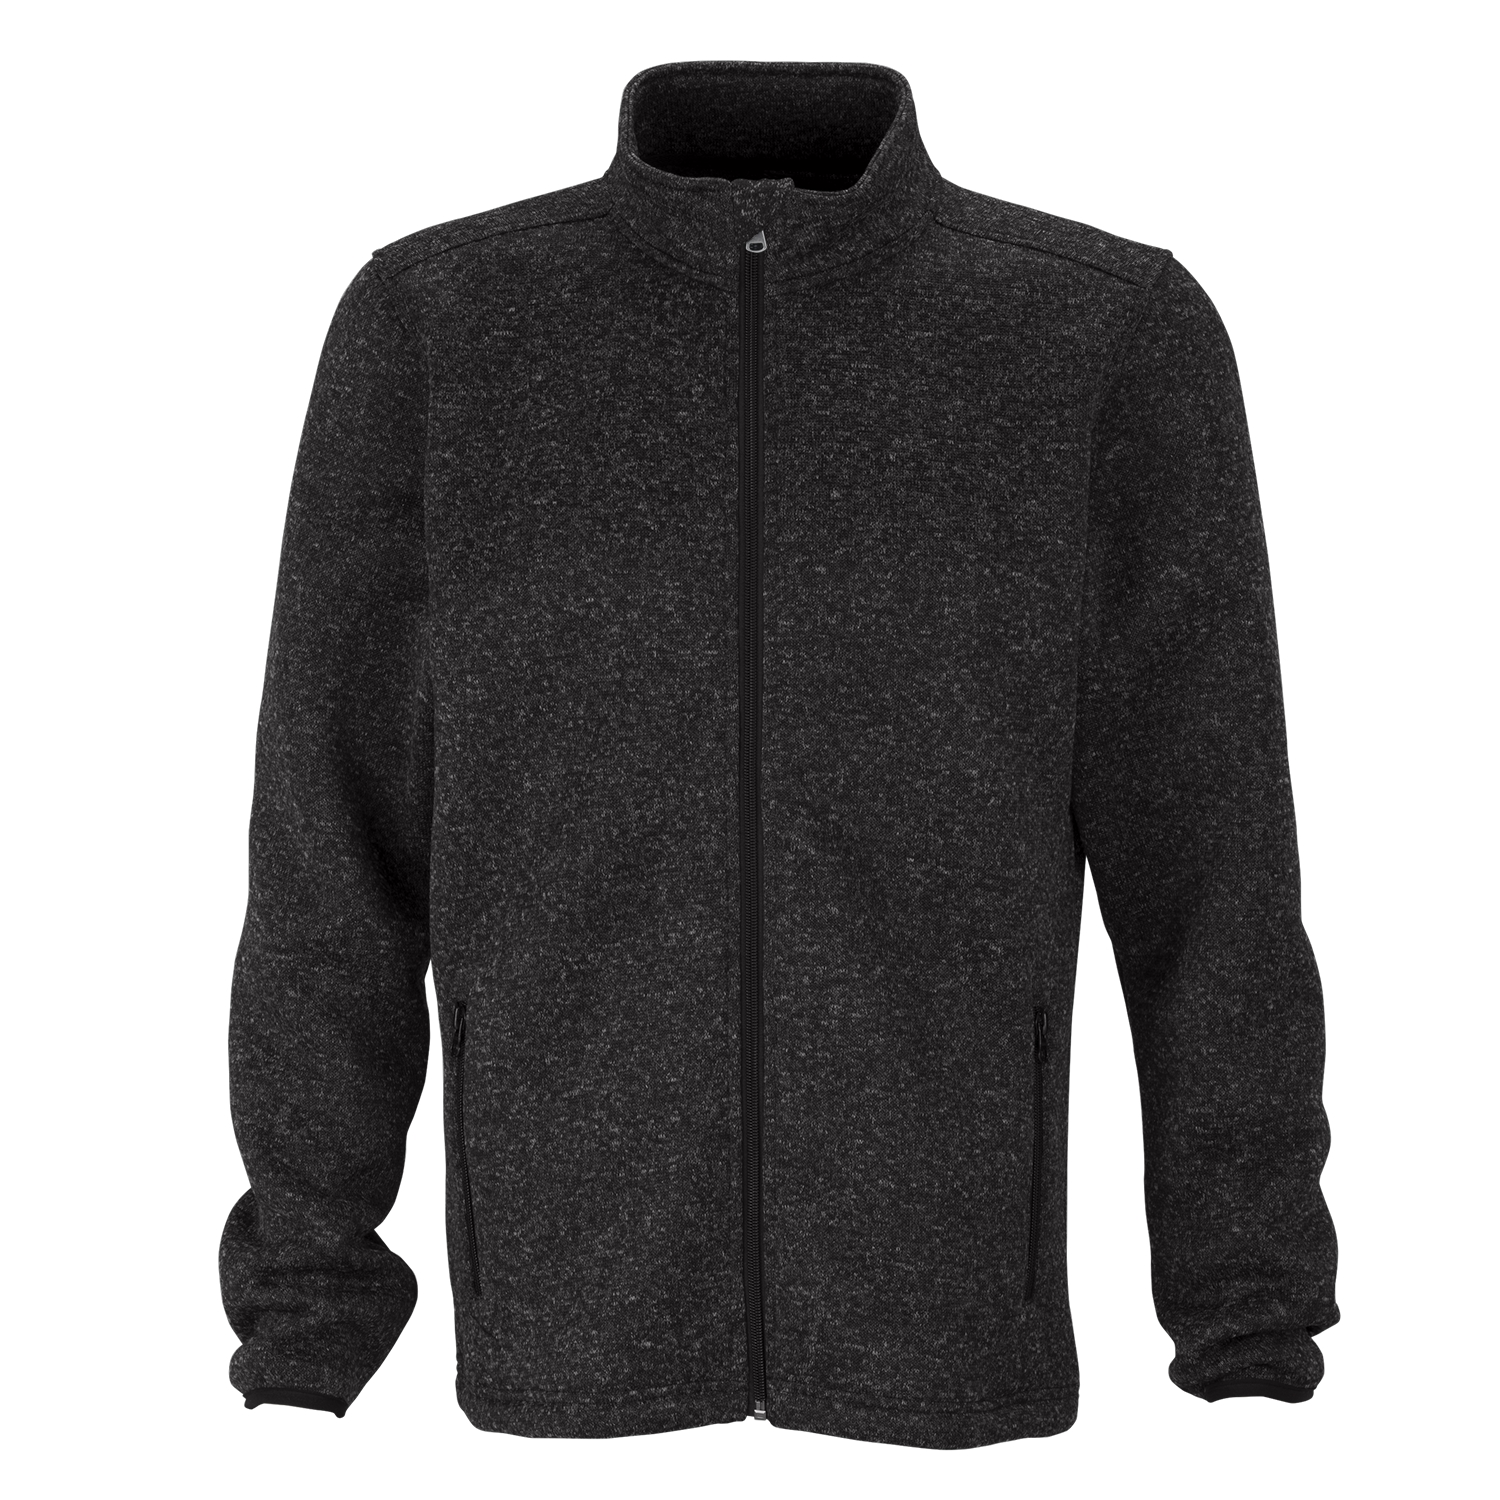 Vantage 3305 - Men's Summit Sweater-Fleece Jacket $42.24 - Outerwear